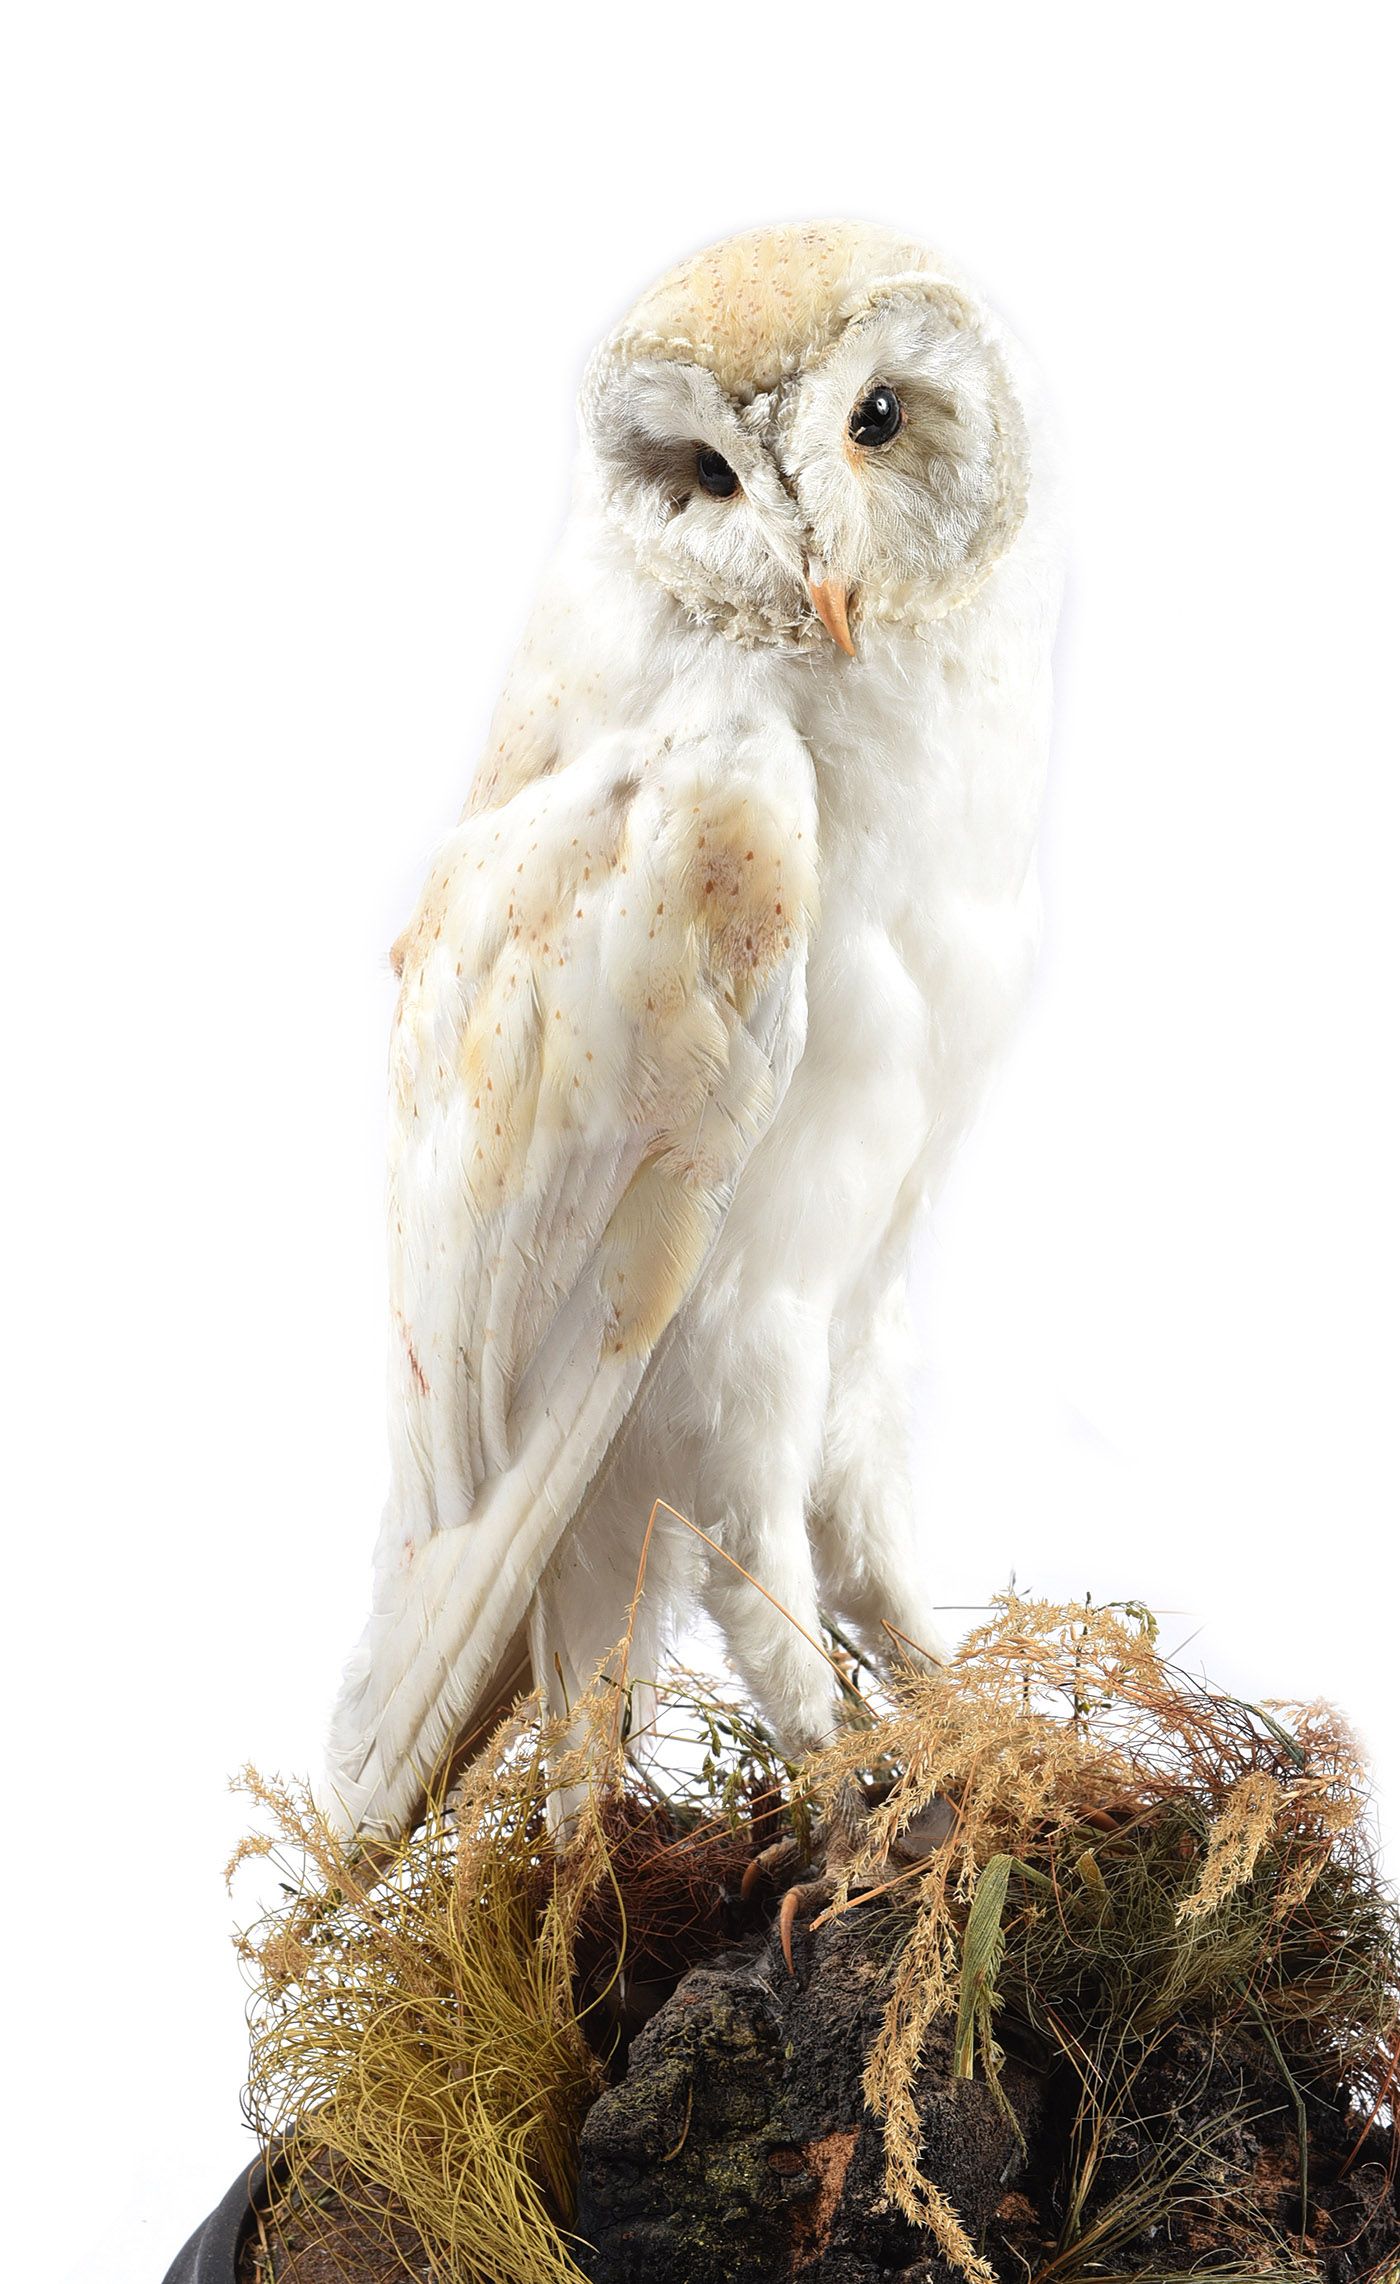 CASED BIRD SPECIMEN at Ross's Online Art Auctions